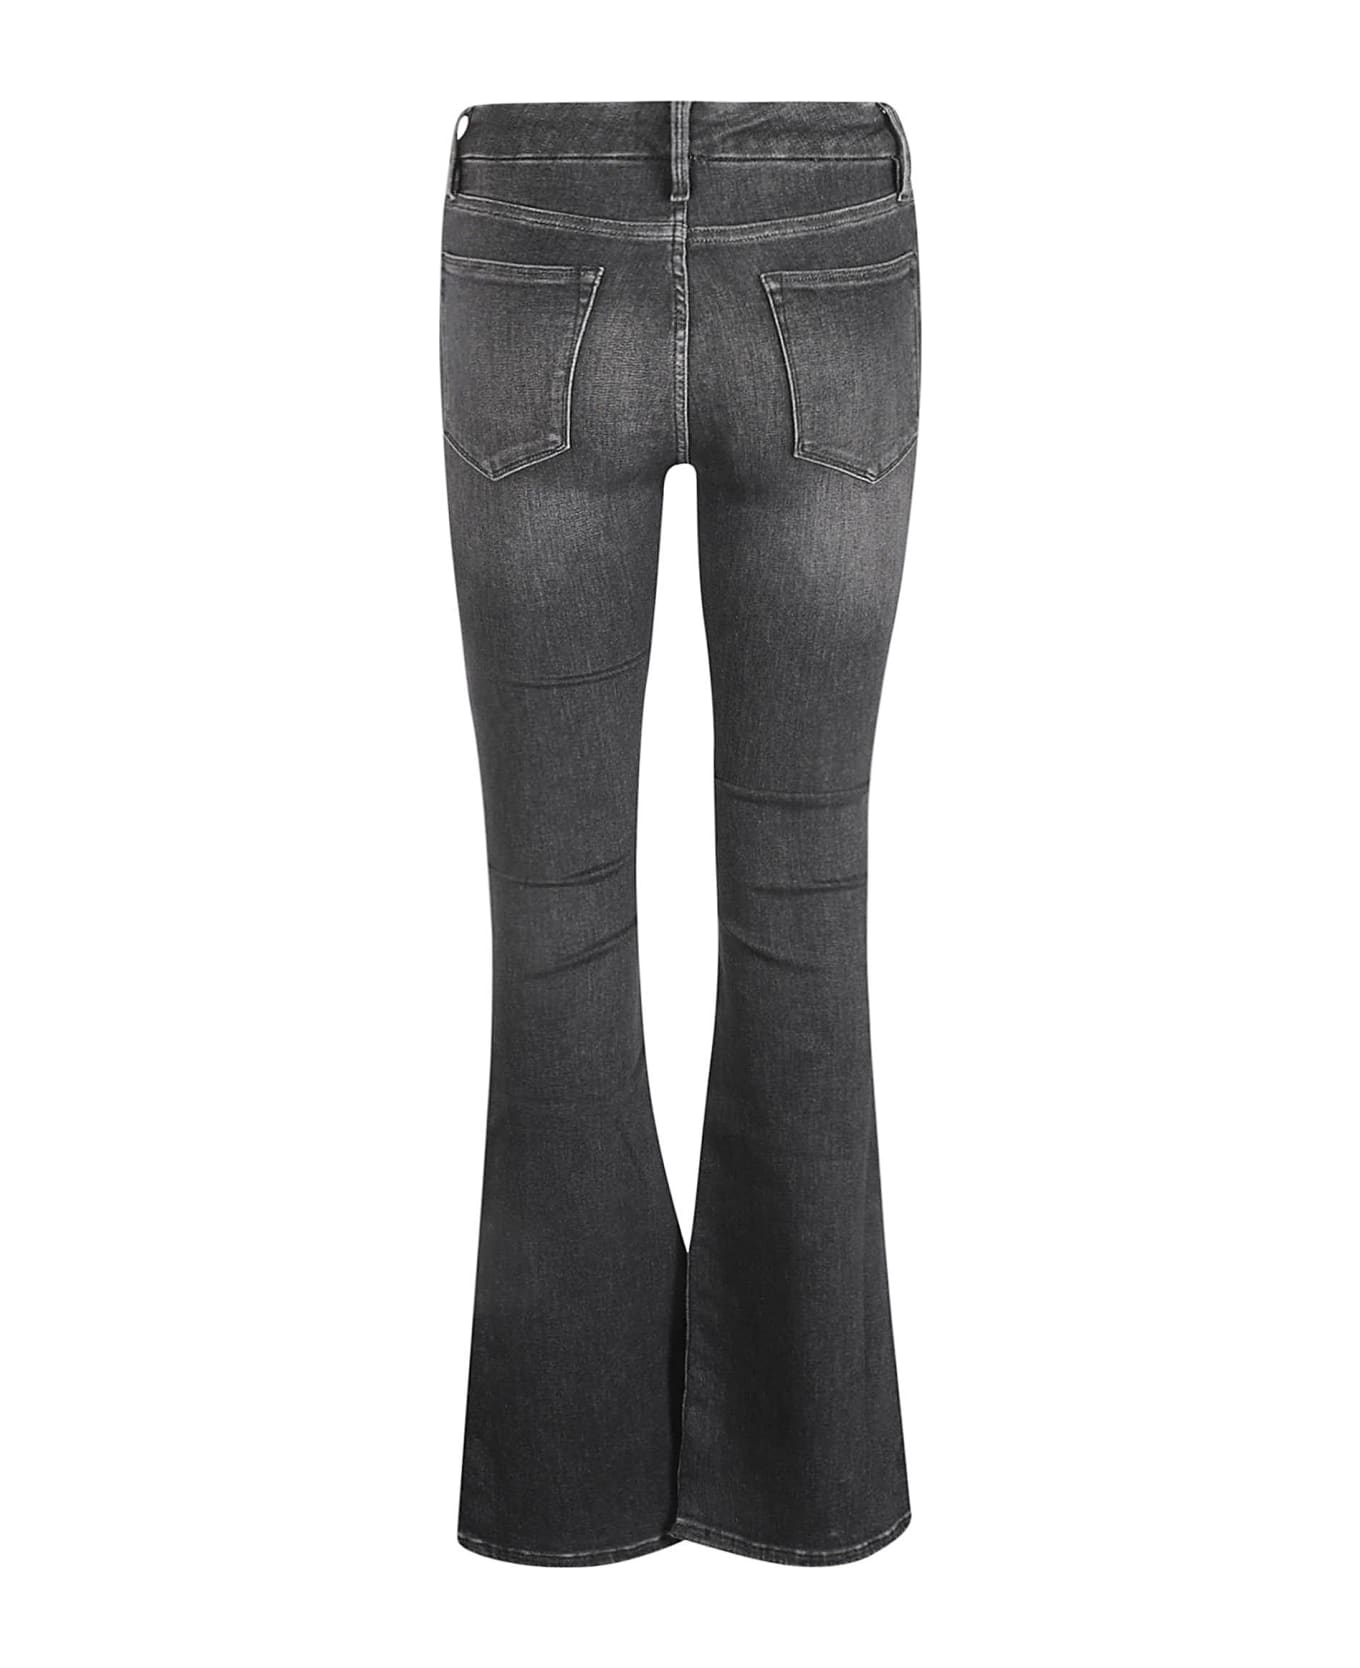 Frame Stonewashed 5 Pockets Flare Jeans - Murphy デニム